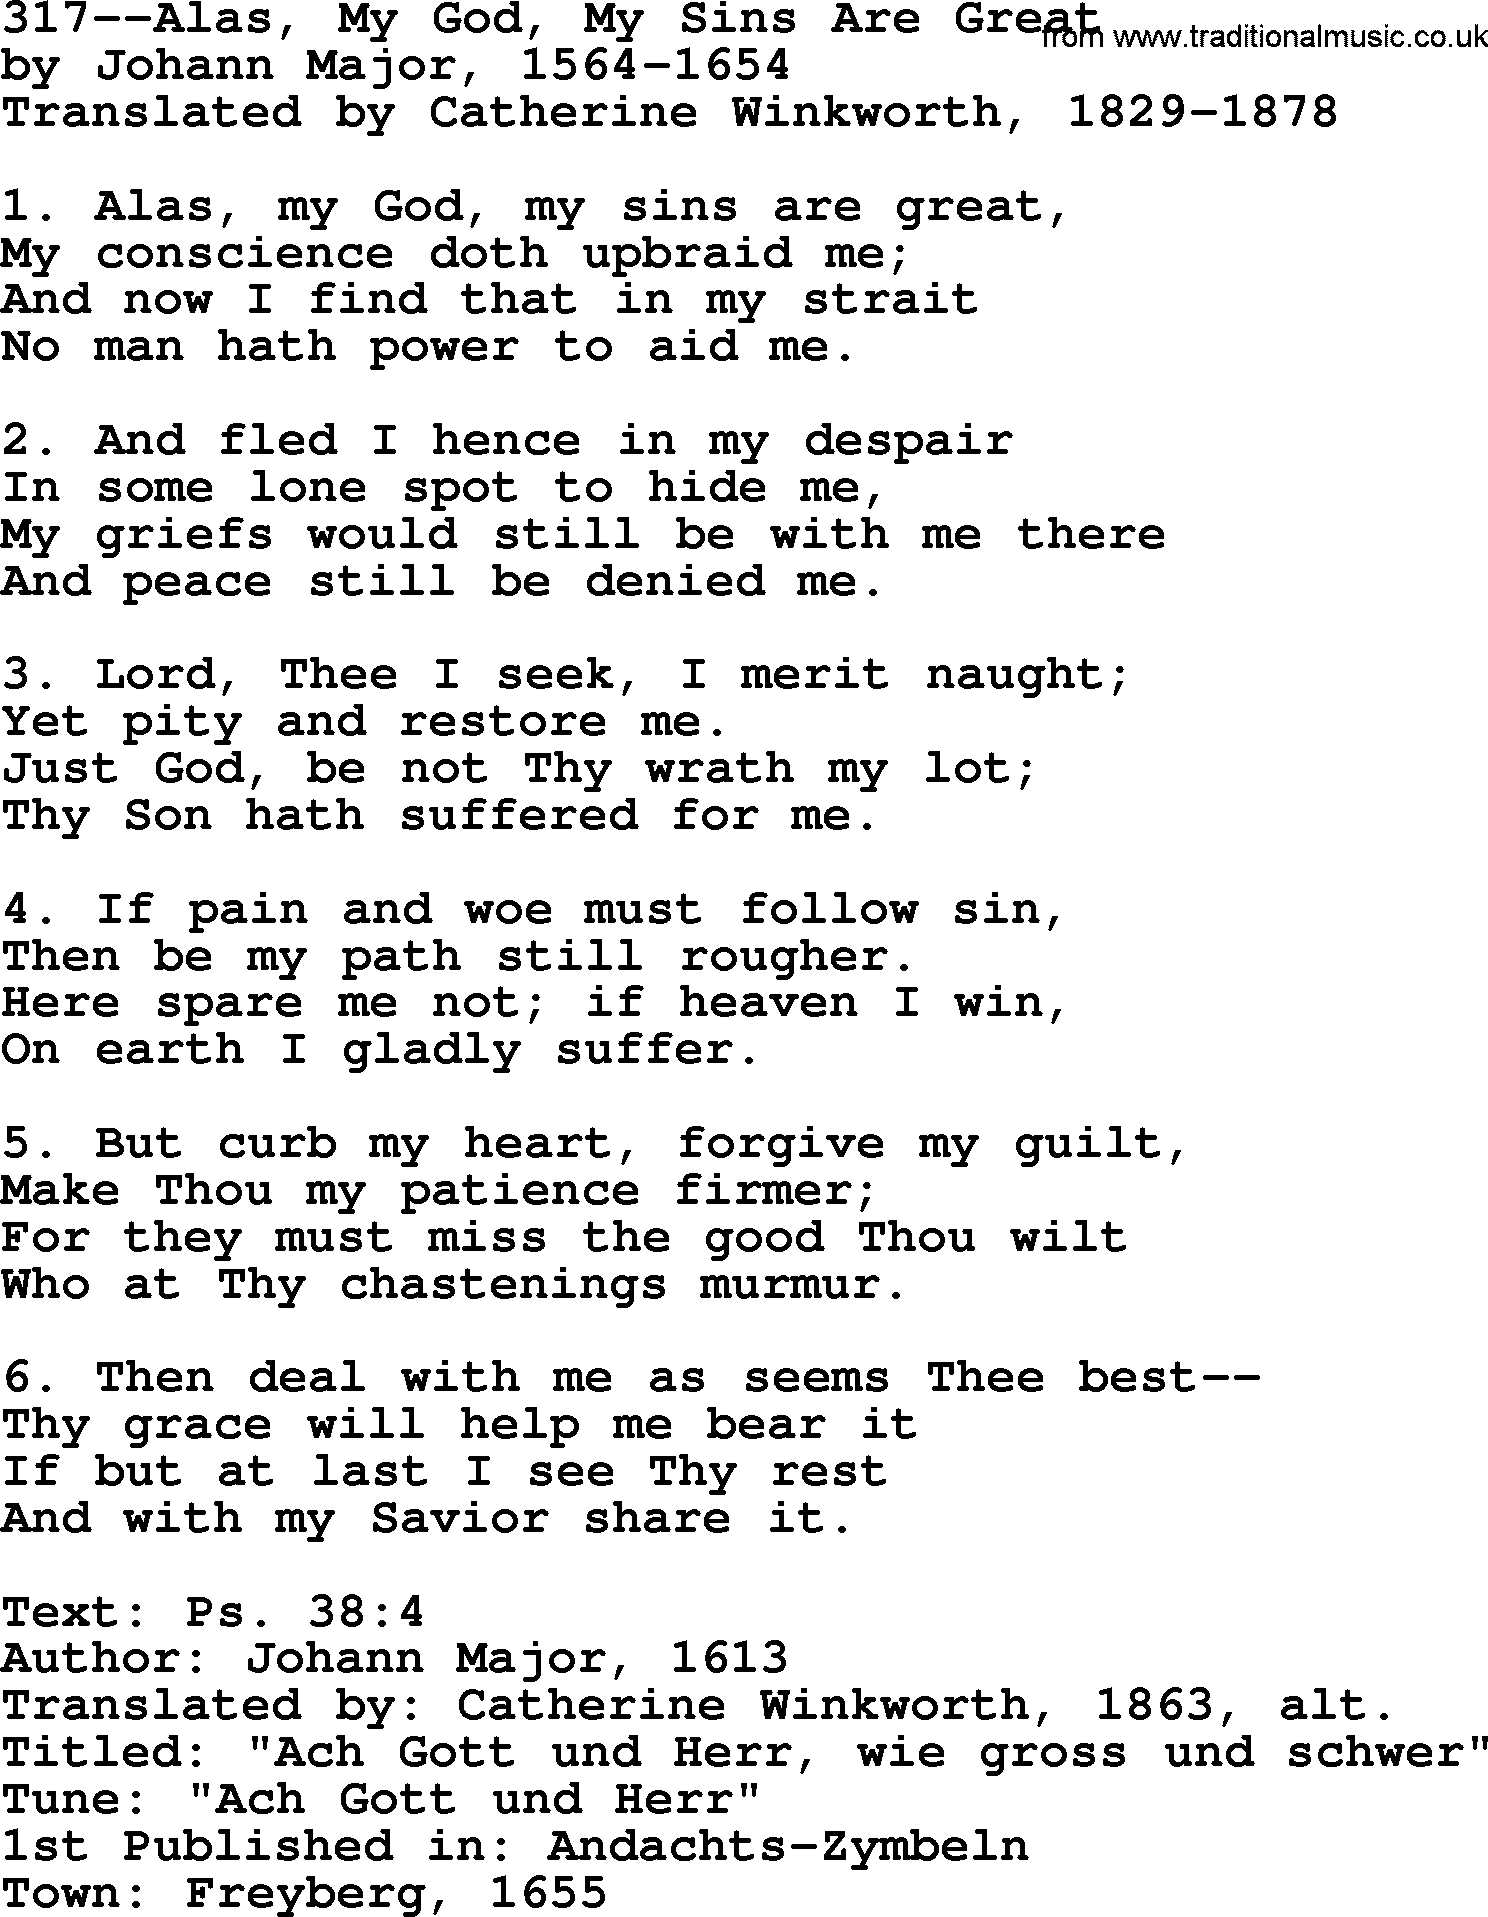 Lutheran Hymn: 317--Alas, My God, My Sins Are Great.txt lyrics with PDF